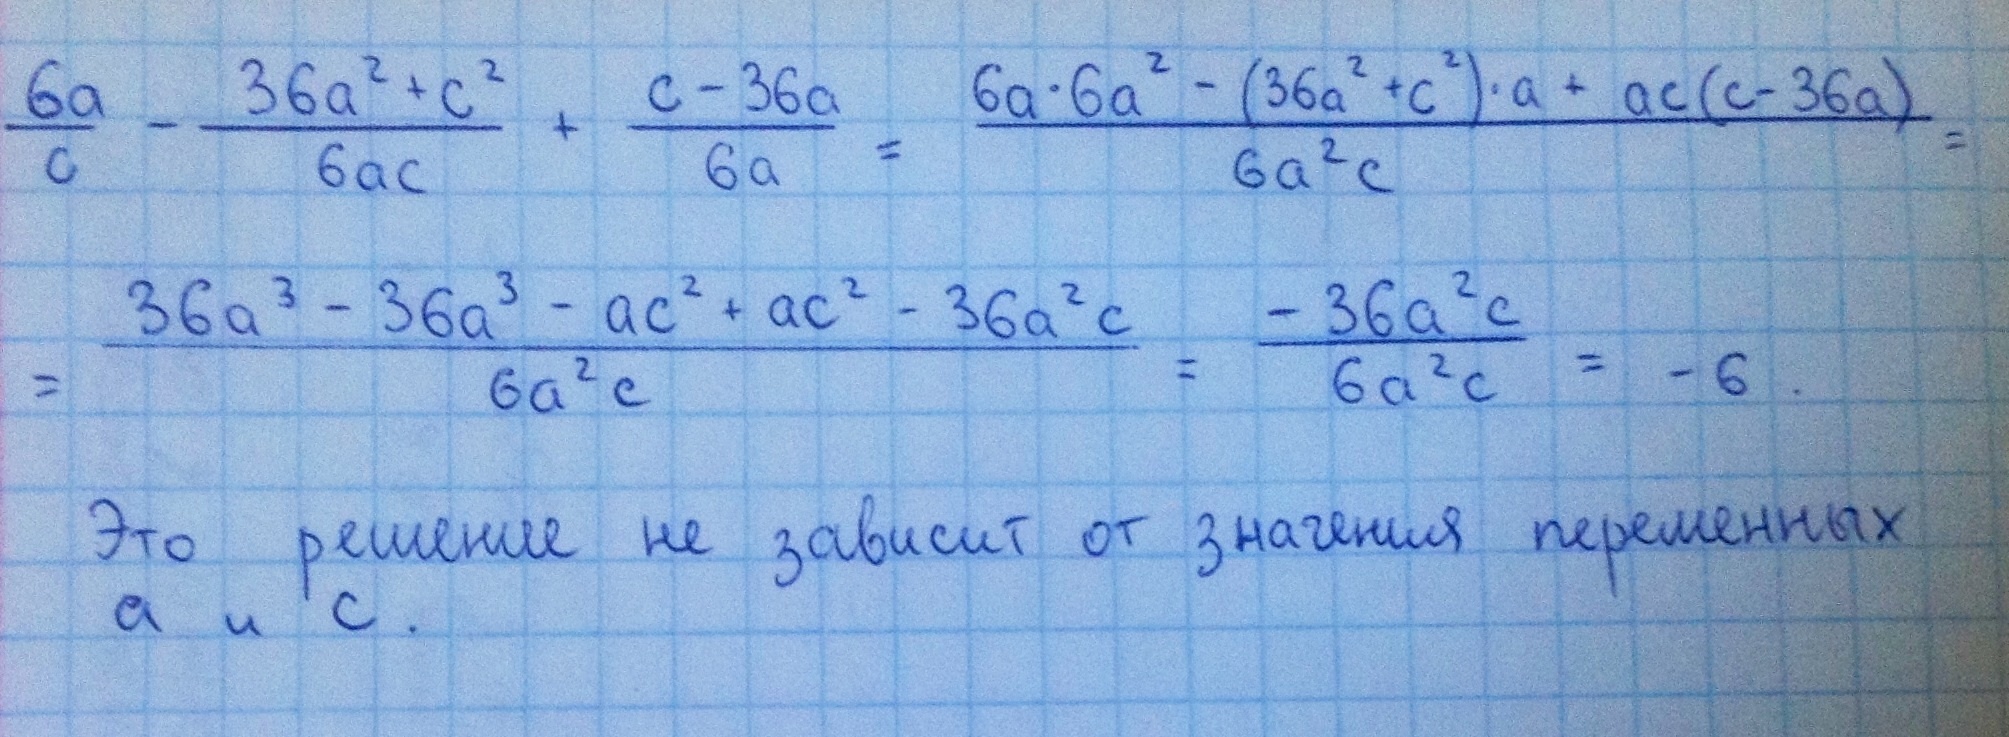 A2 ac c. 7a/6c-49a 2+36c. 6a/c-36a2+c2/6ac+c-36a/6a. 42/7а-а2-6/а при а 2. 36a^2+c^2.